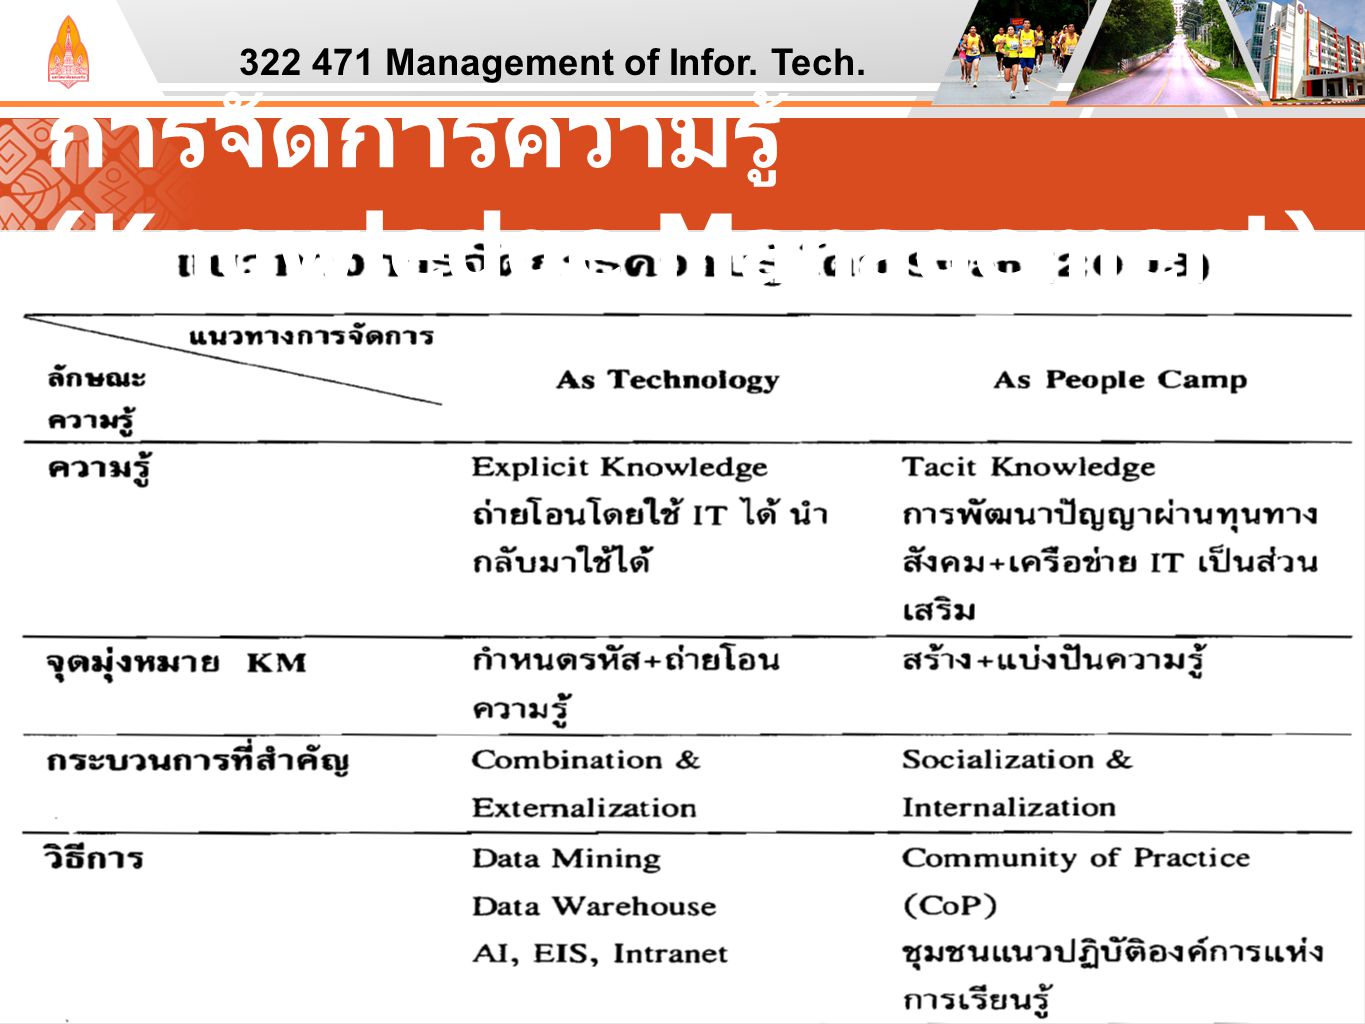 Management of Infor. Tech.